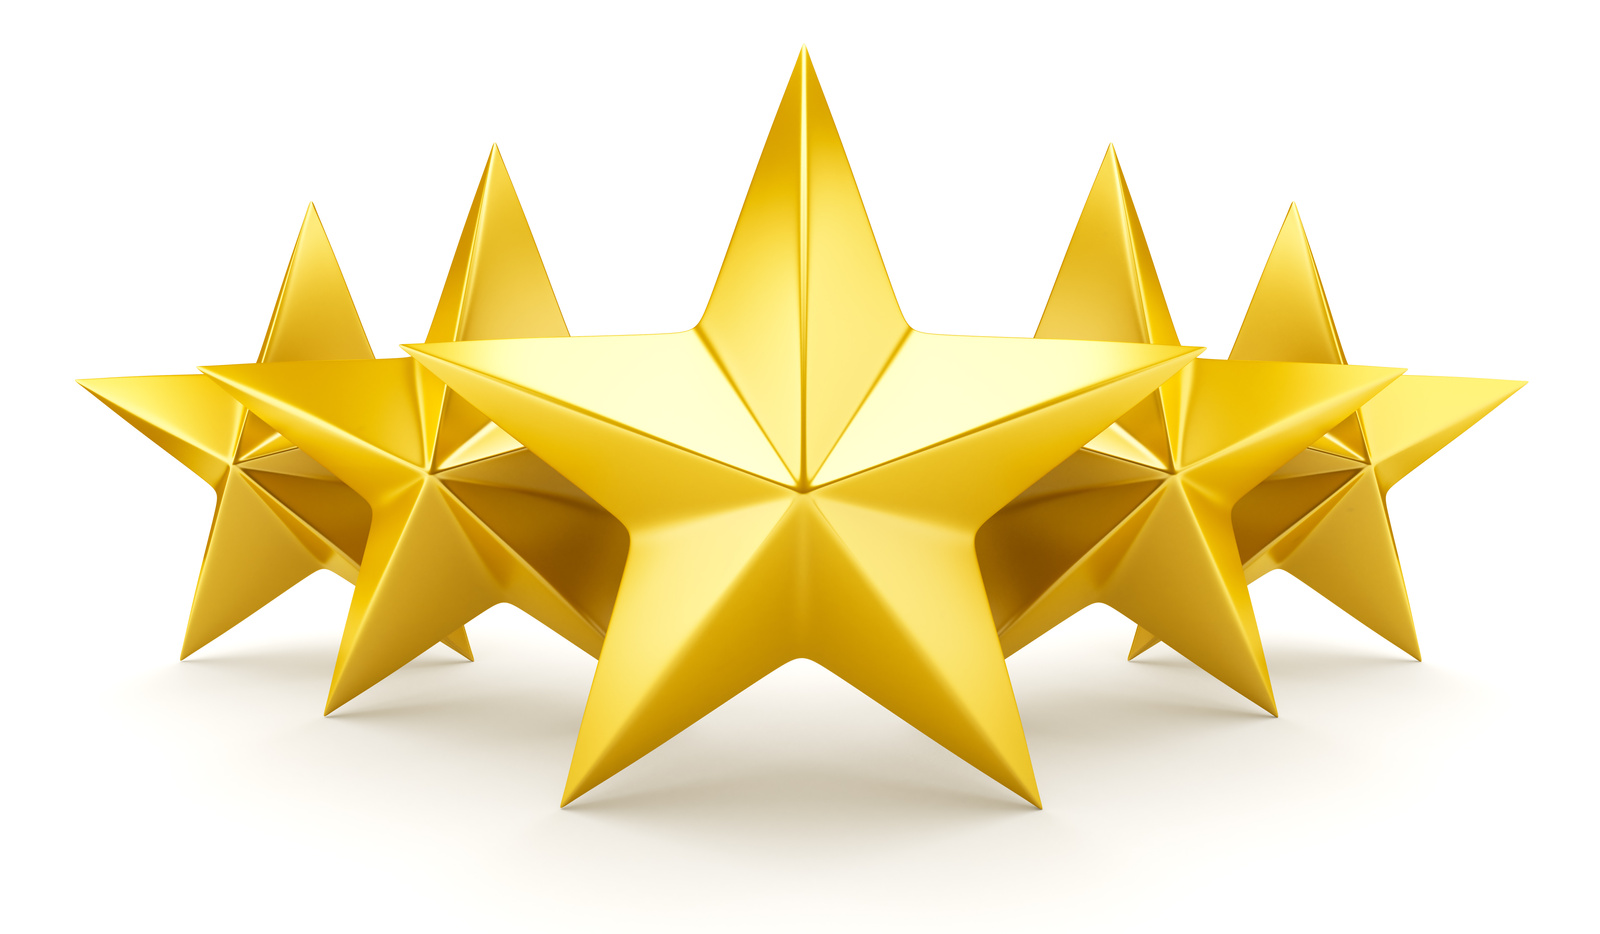 Five star rating - shiny golden stars